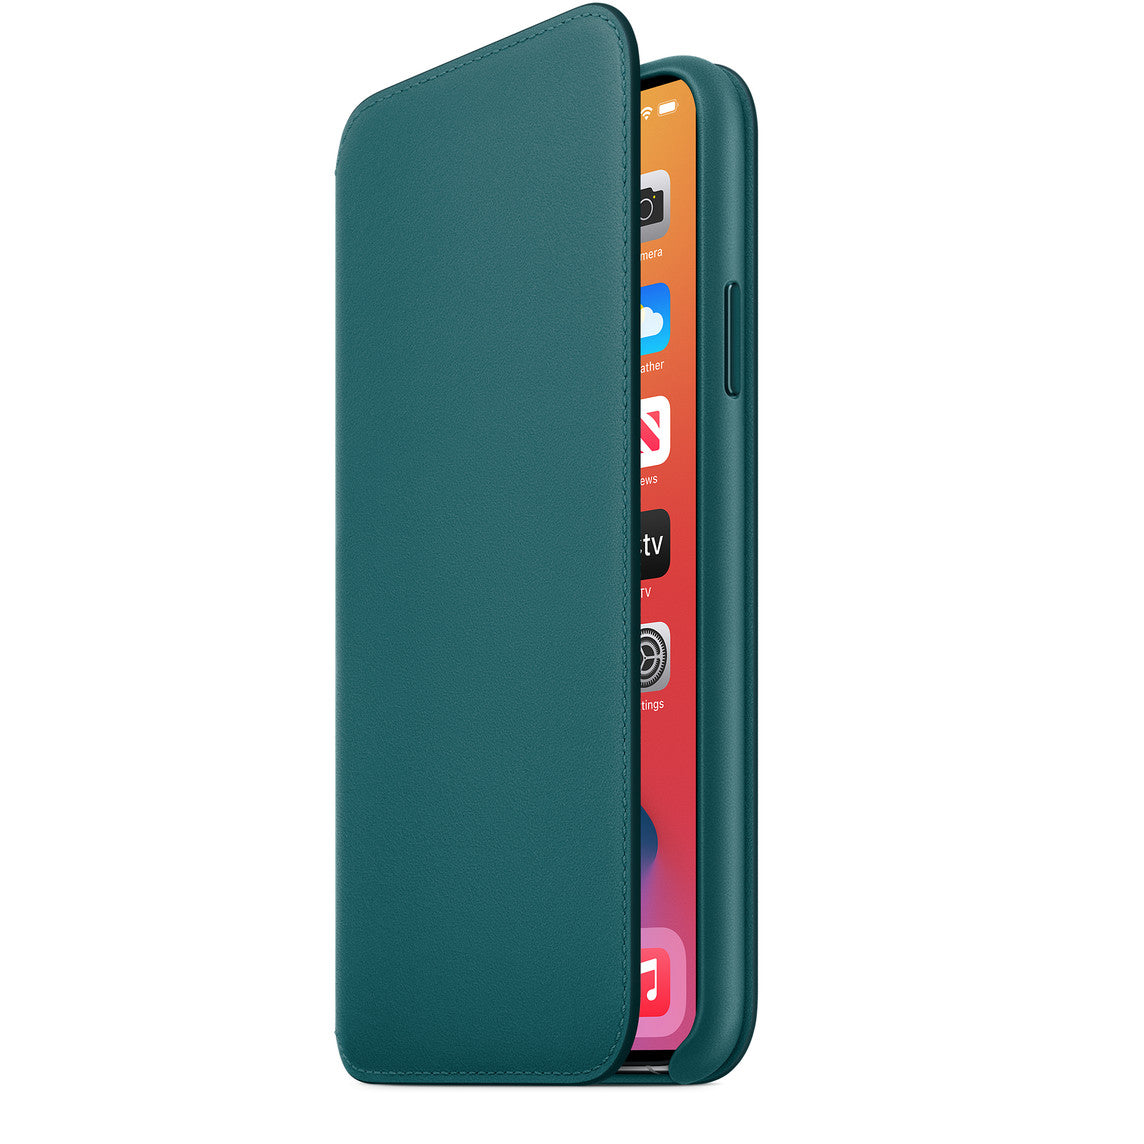 Genuine Apple Leather Folio Case for iPhone 11 Pro - Peacock